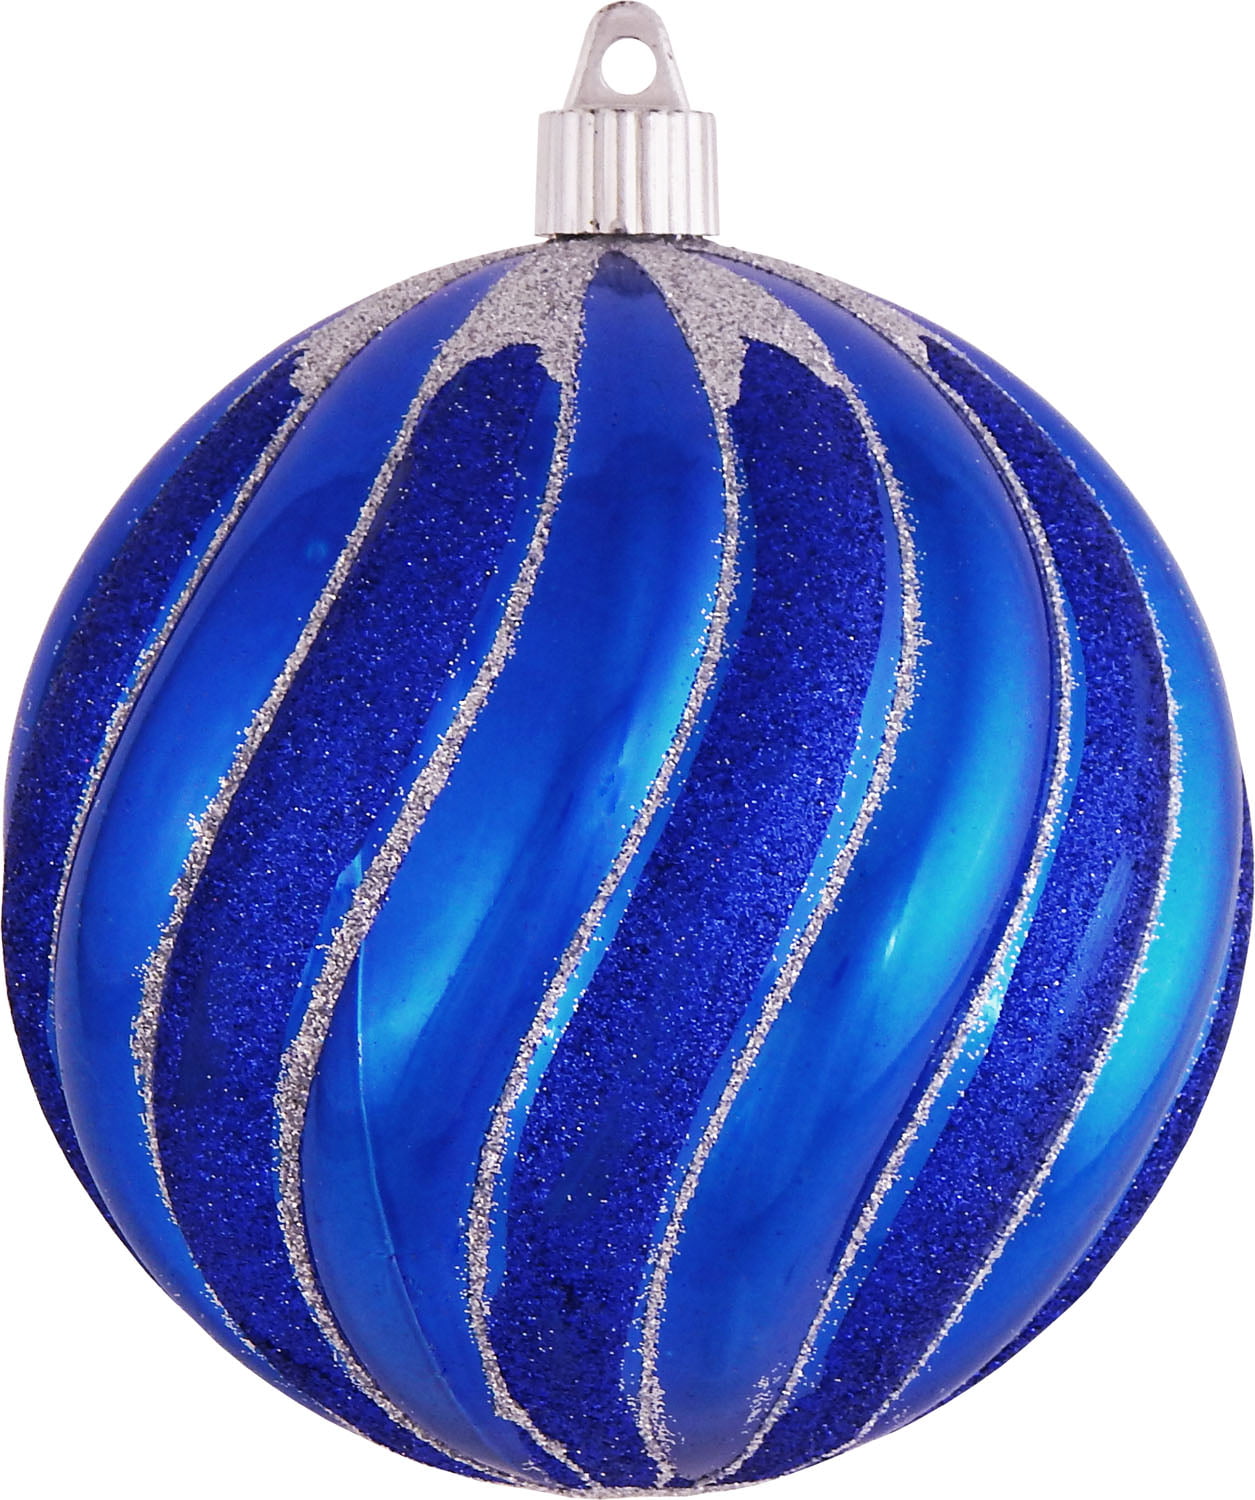  EOTCT Christmas Ornaments 11x3x3 inch Glitter Blue